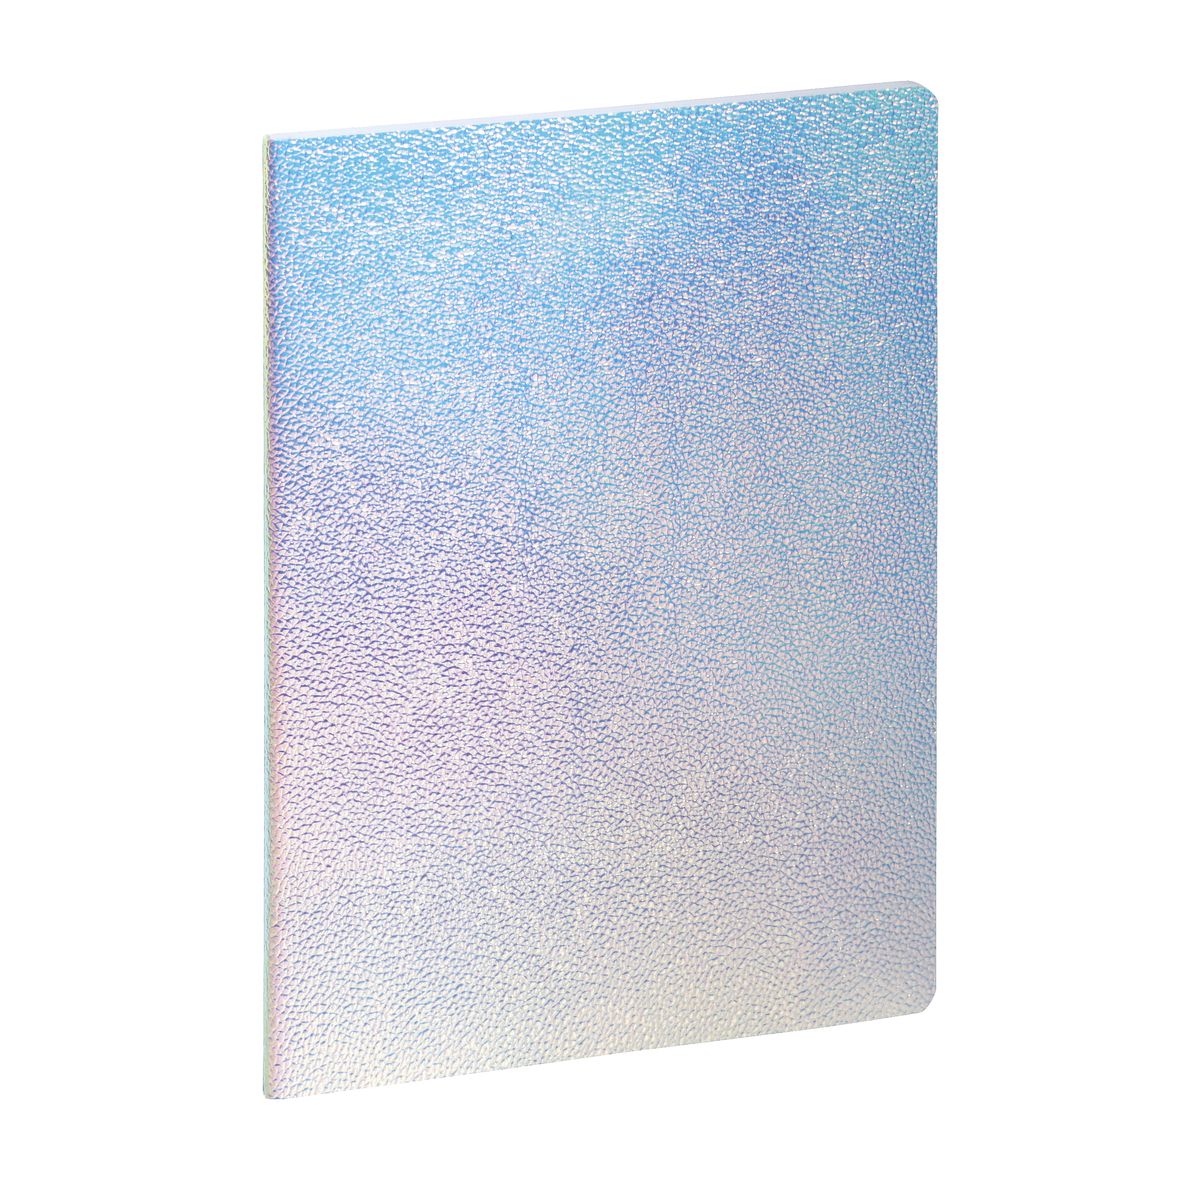 Notebook Ariel - 14,5 x 21 cm - Exacompta